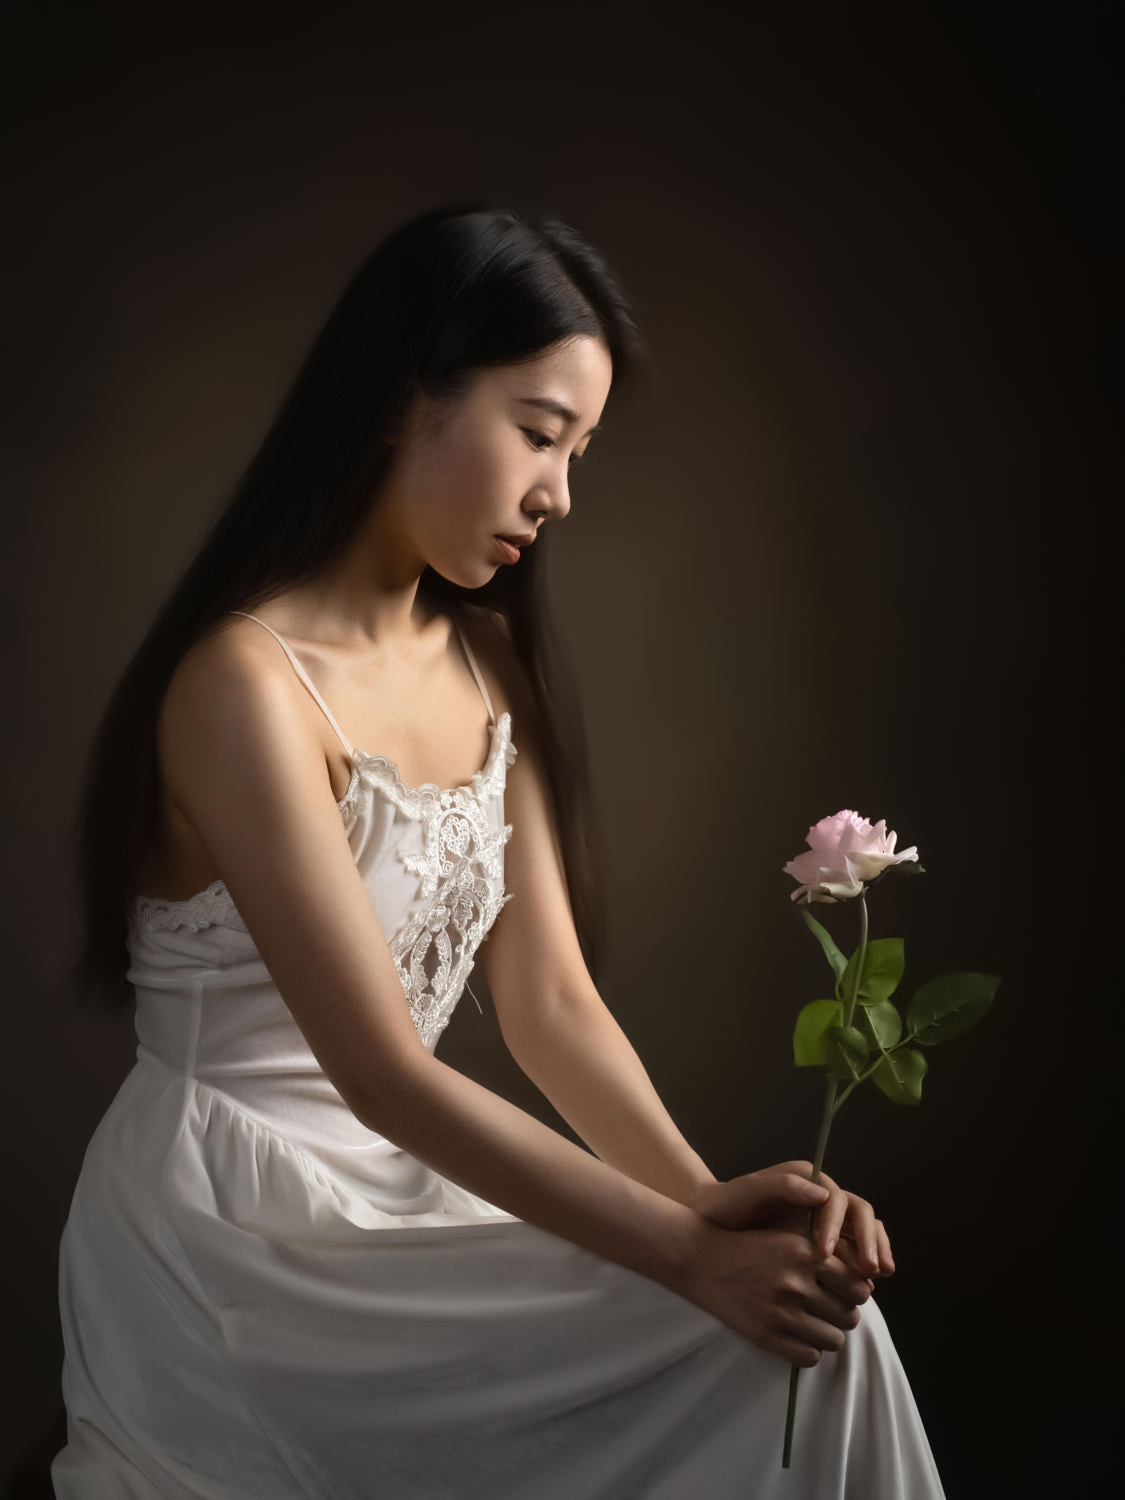 Lee Hu Women Asian Long Hair Flowers Simple Background 1125x1500